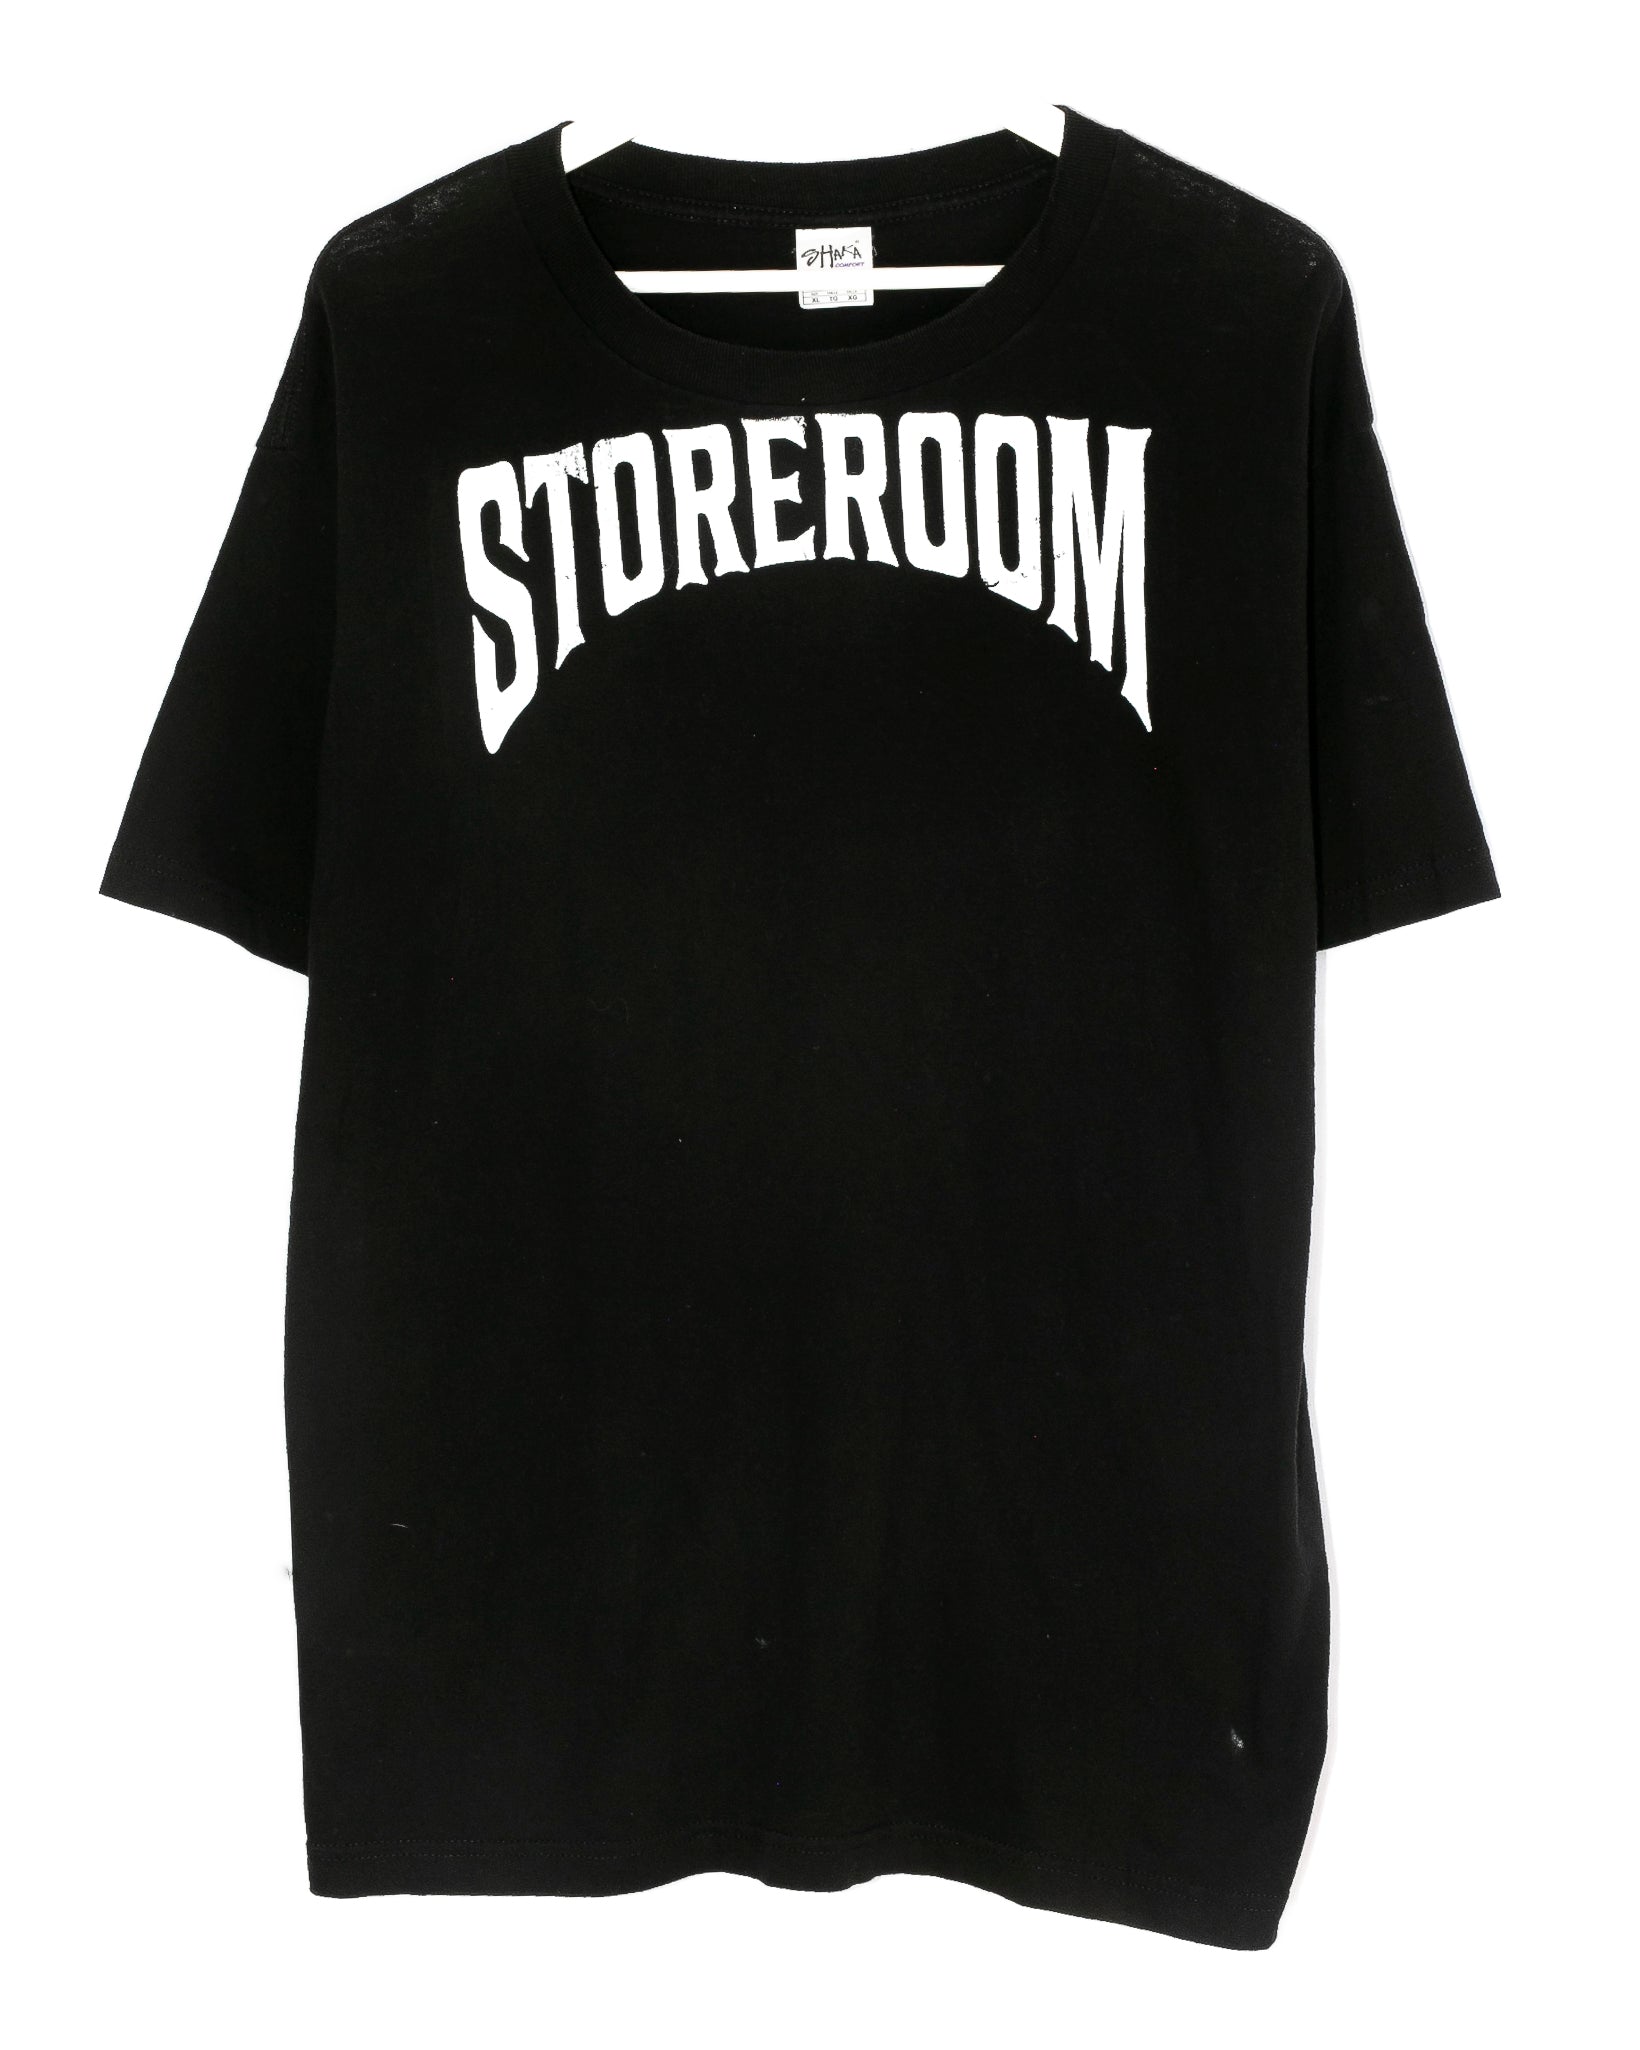 Vintage Storeroom Merch T-shirt